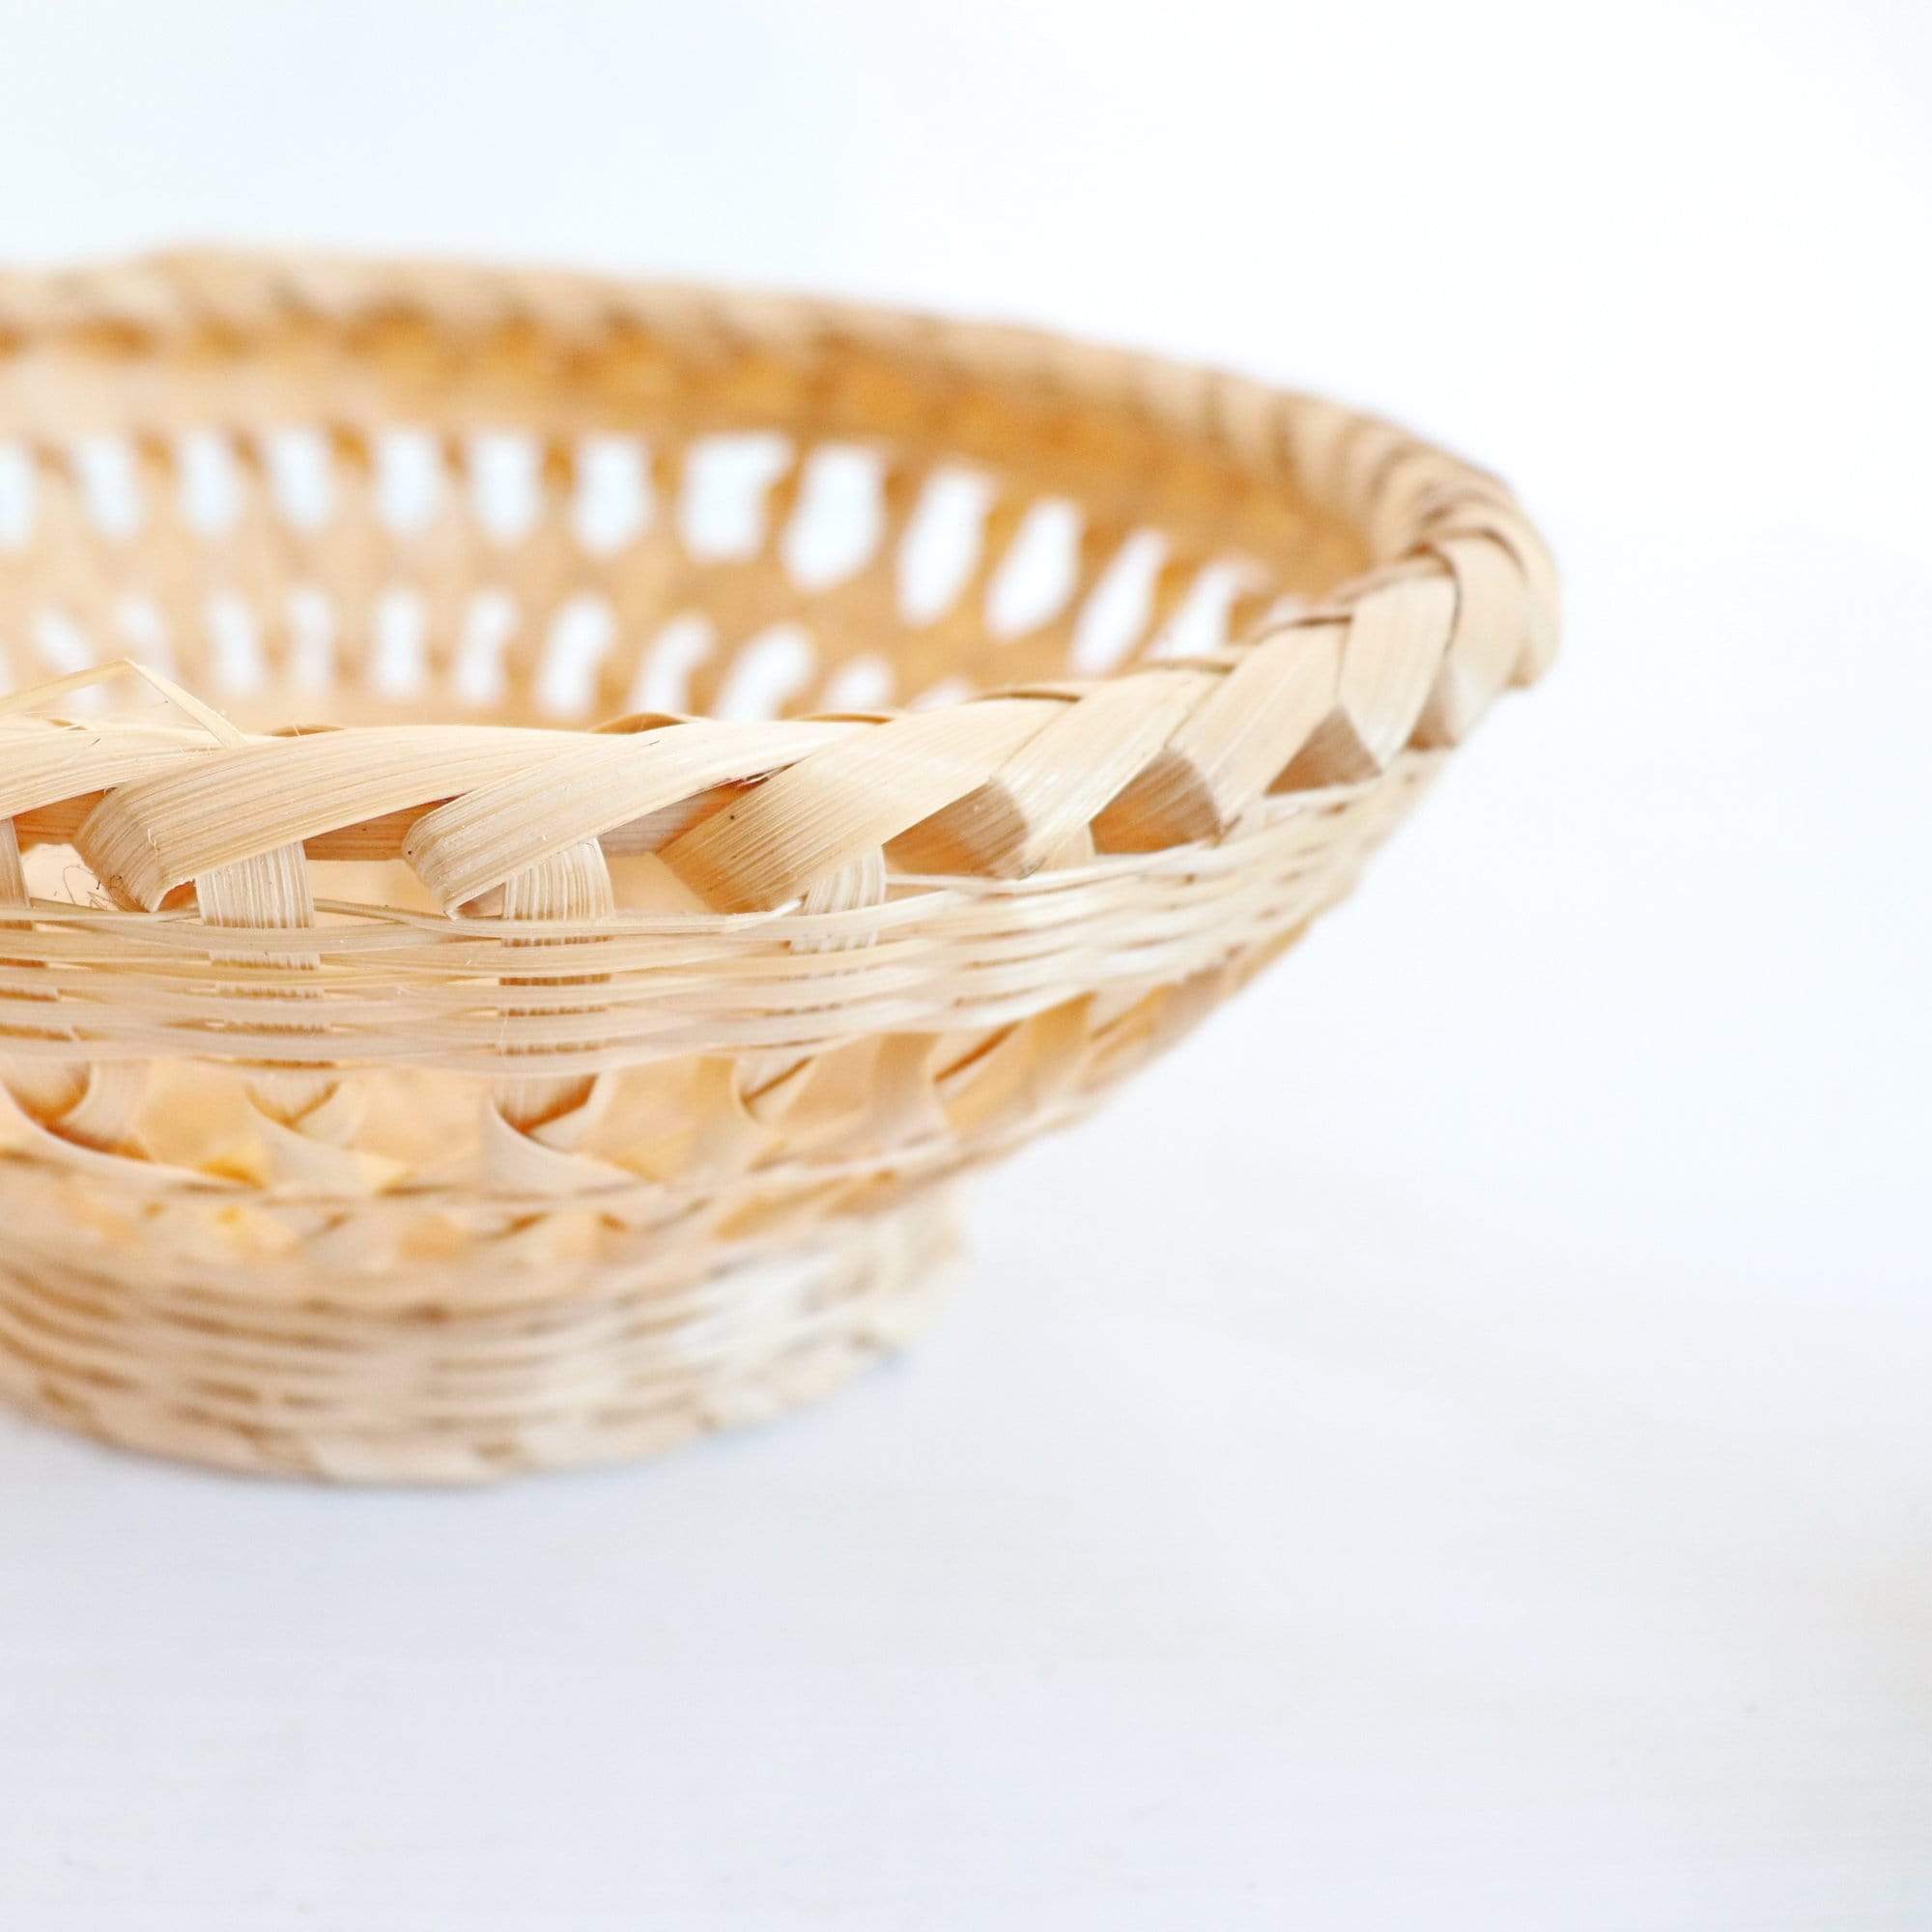 SANGTONG - Bamboo Basket